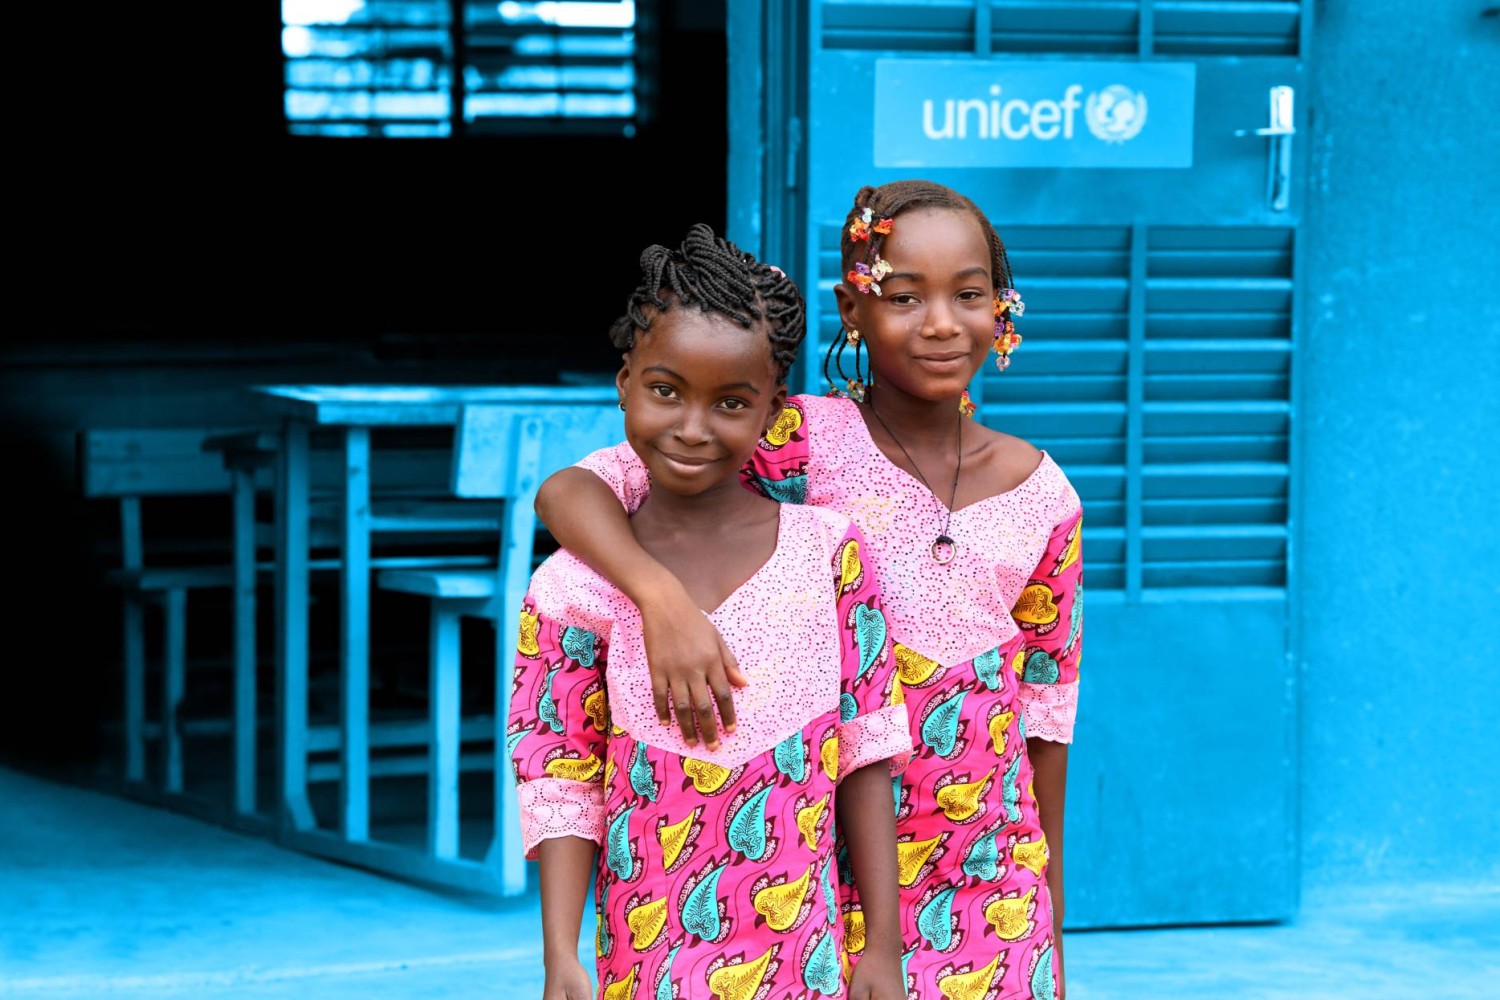 soutenez UNICEF Luxembourg